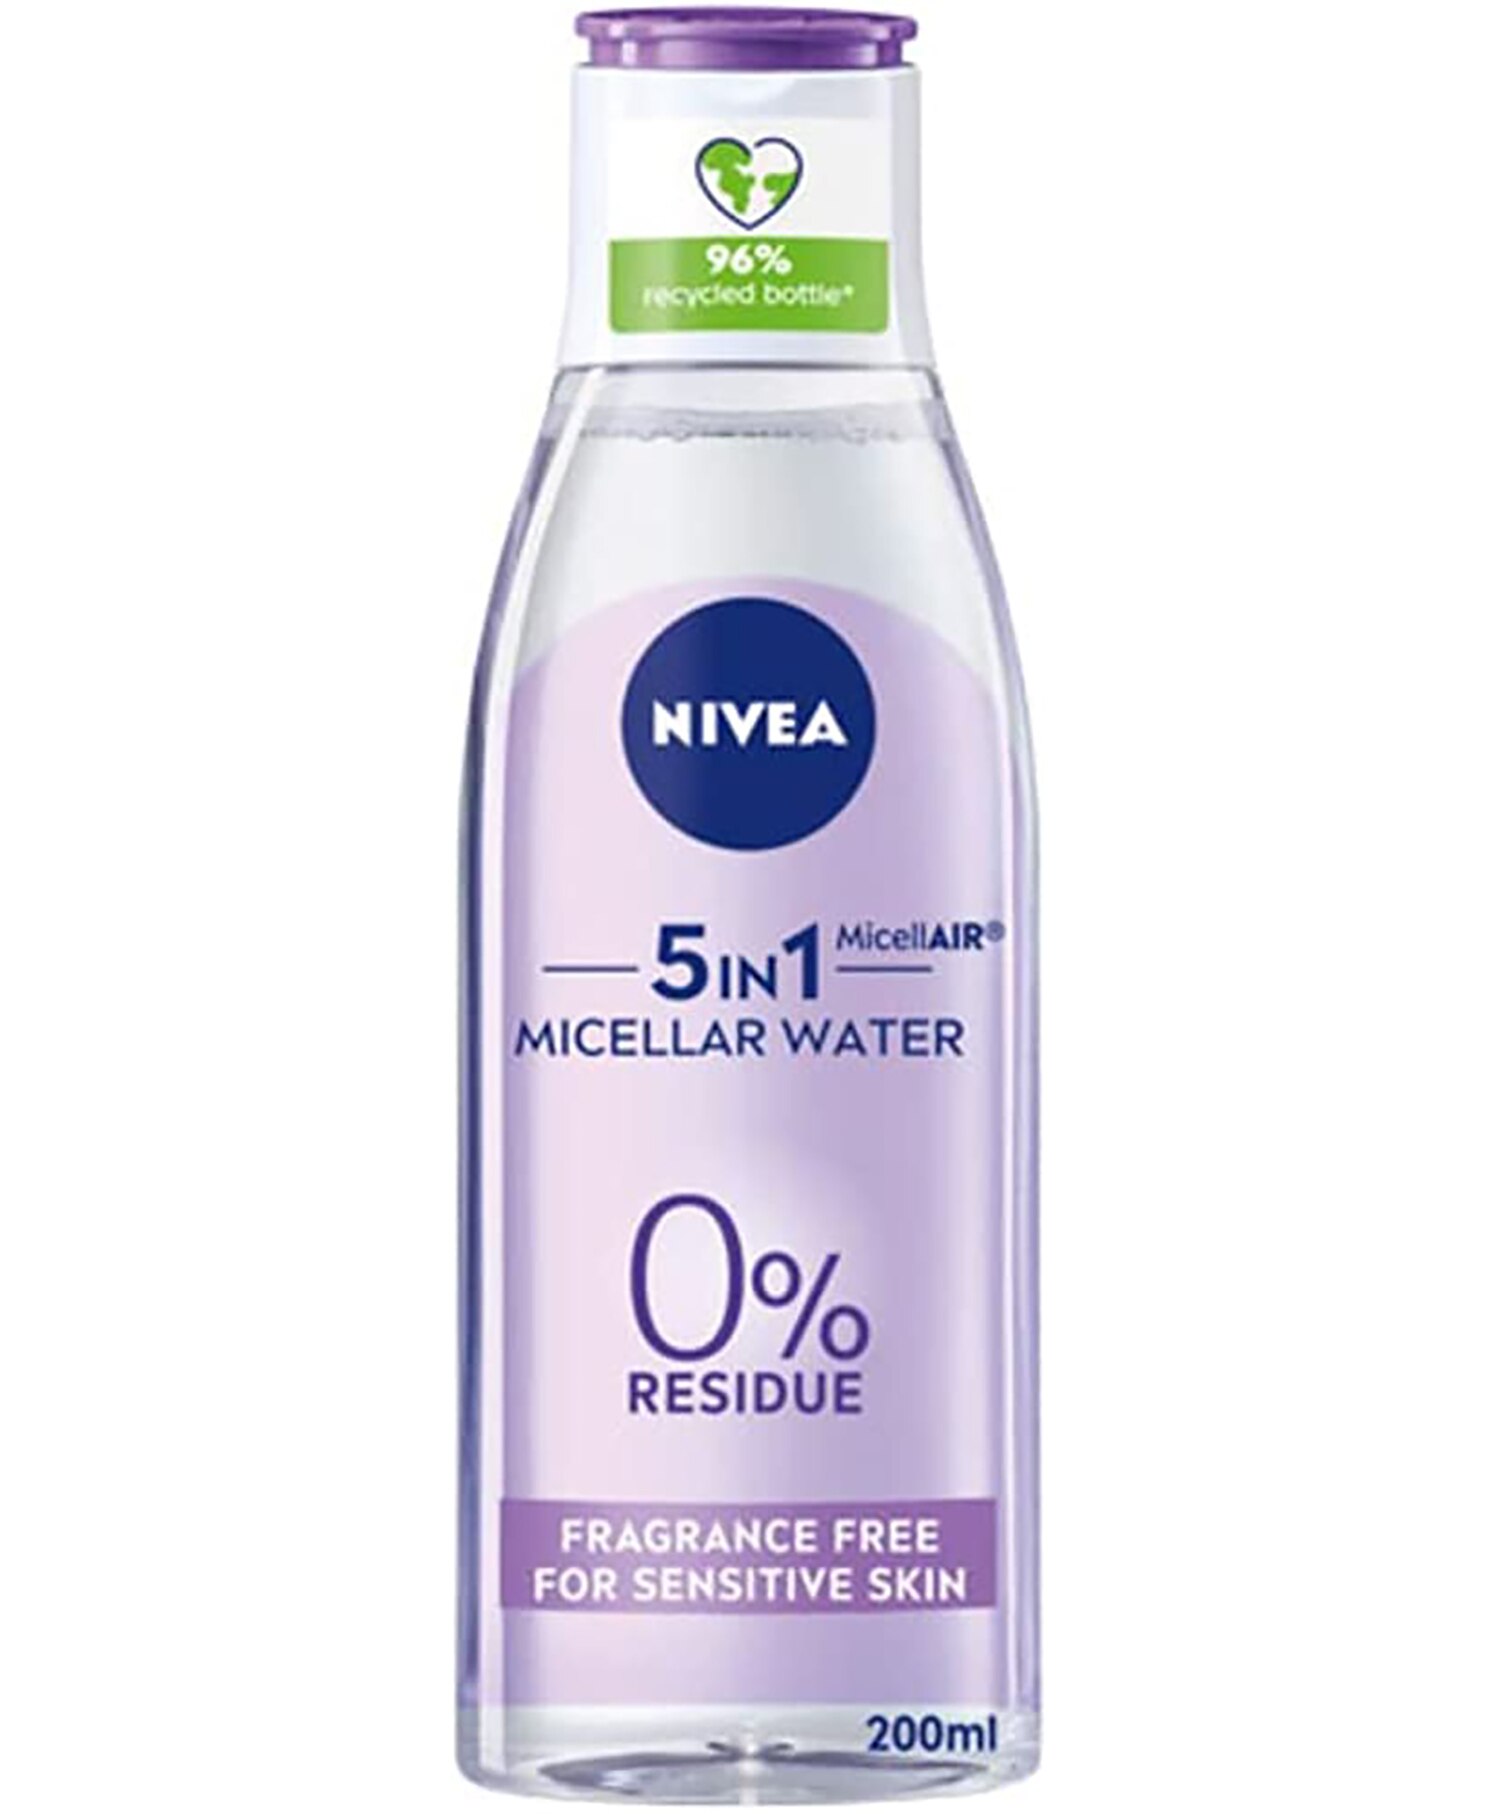 Nivea Micellair Water Sensitive